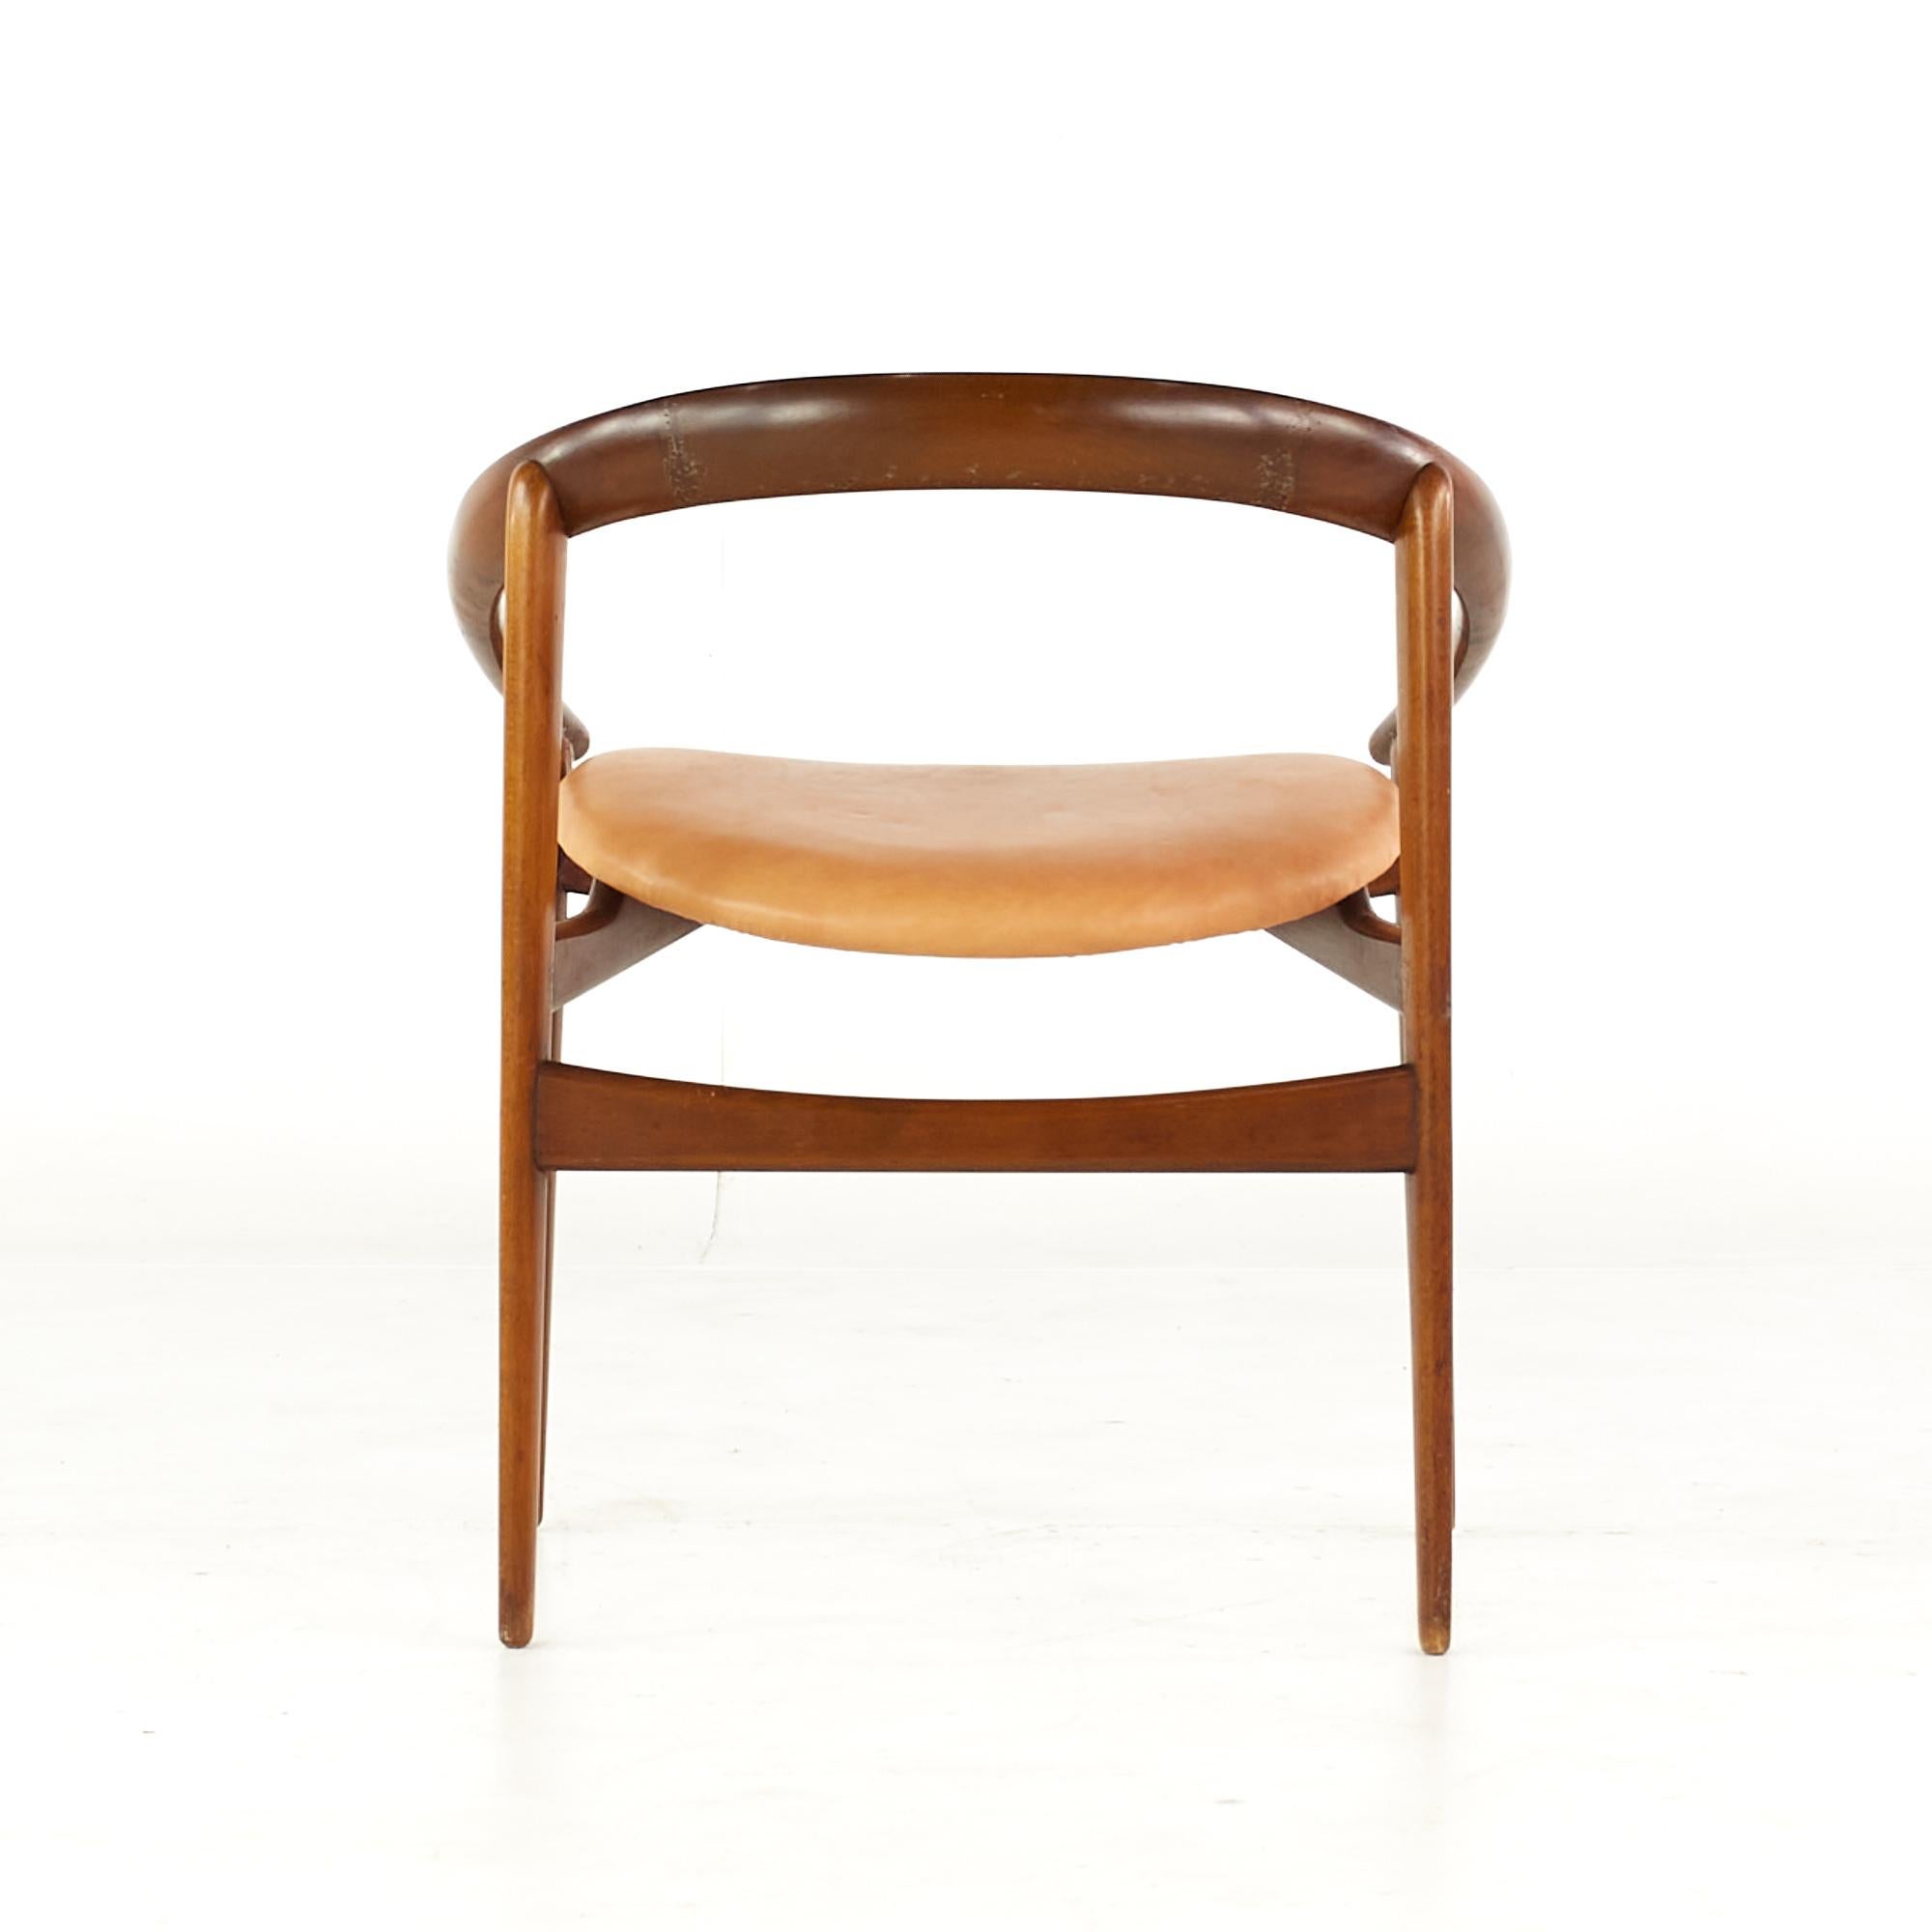 H Brockmann Petersen for Louis G Thiersen MCM Teak Horseshoe Chairs, Pair For Sale 1